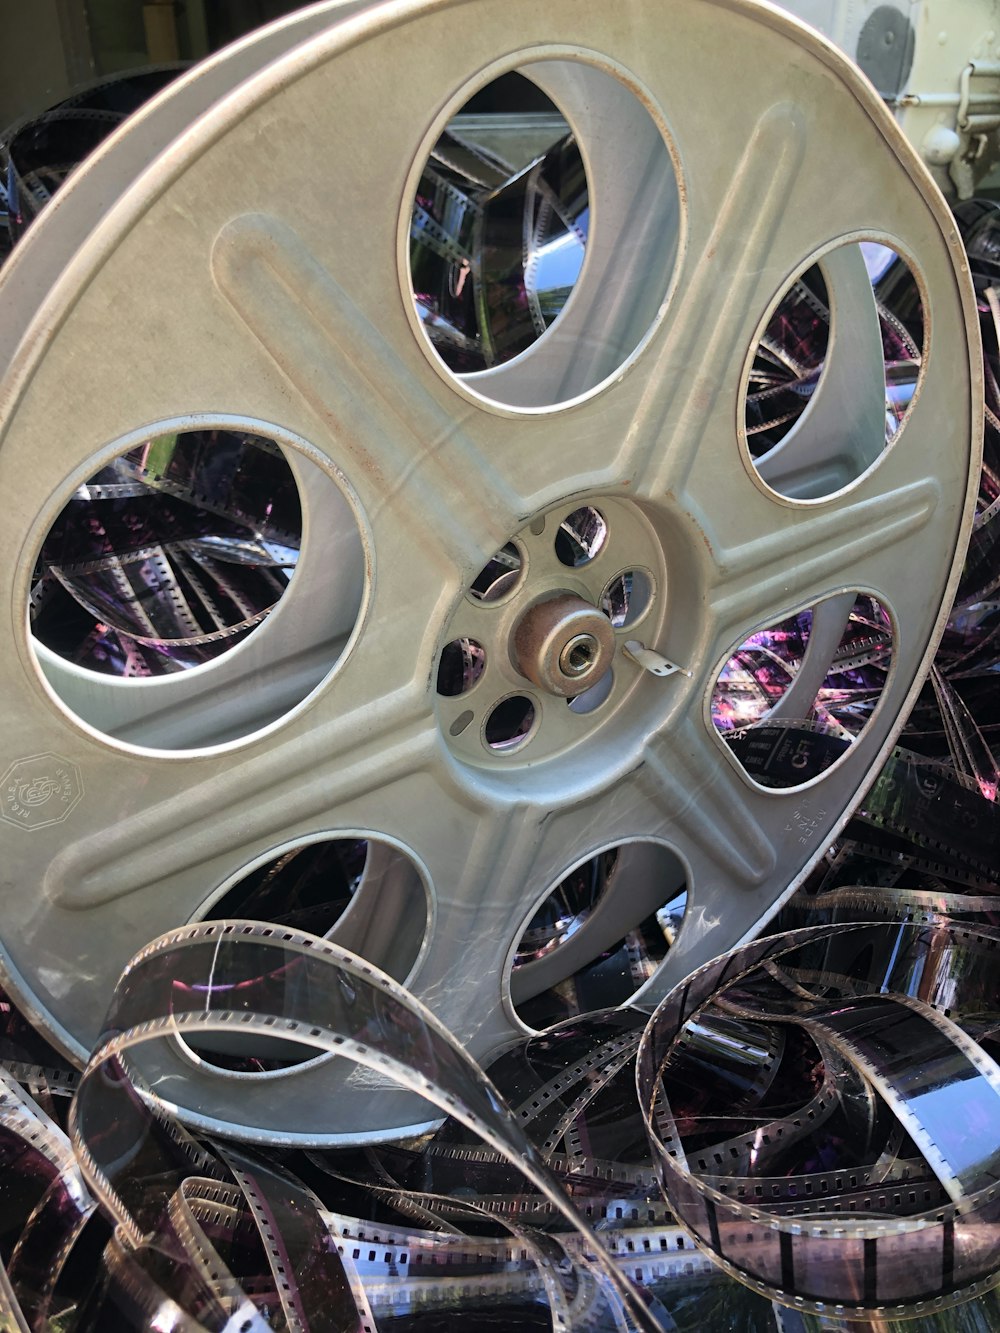 a close up of a wheel